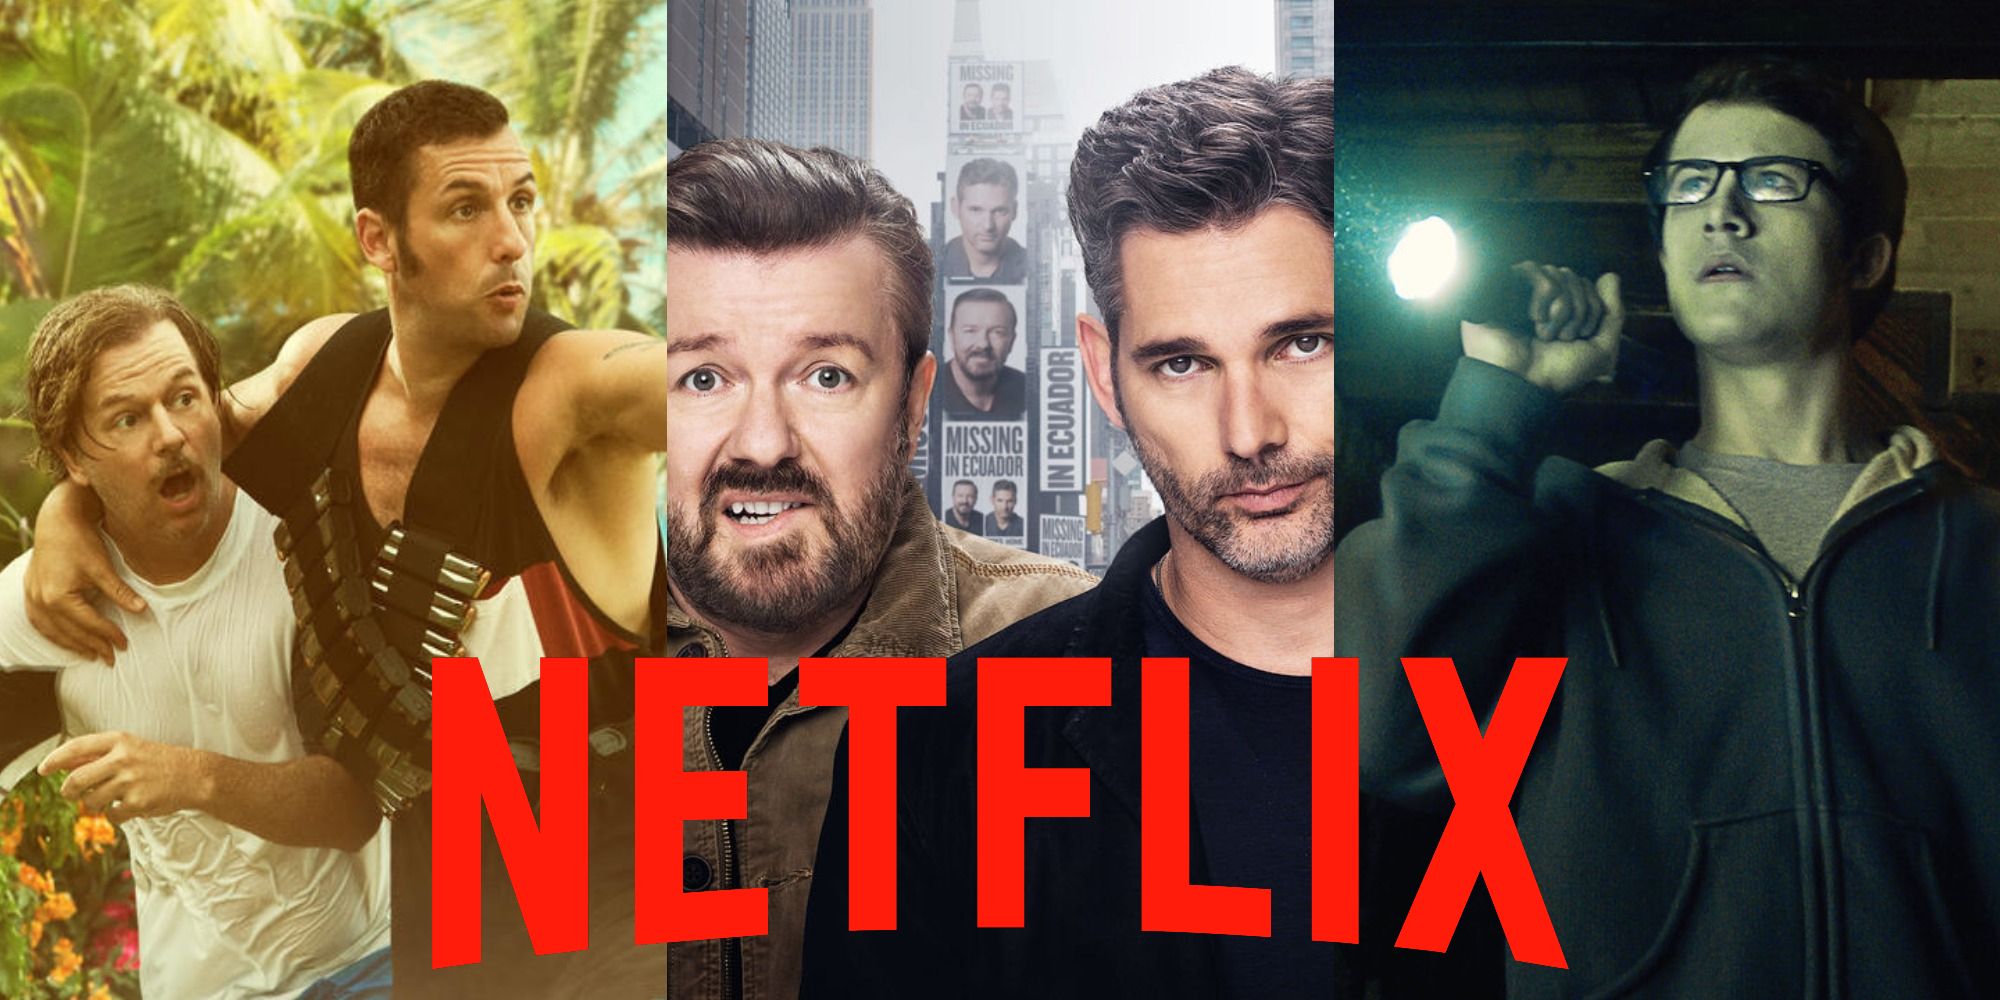 20 Worst Netflix Original Movies, According To Rotten Tomatoes